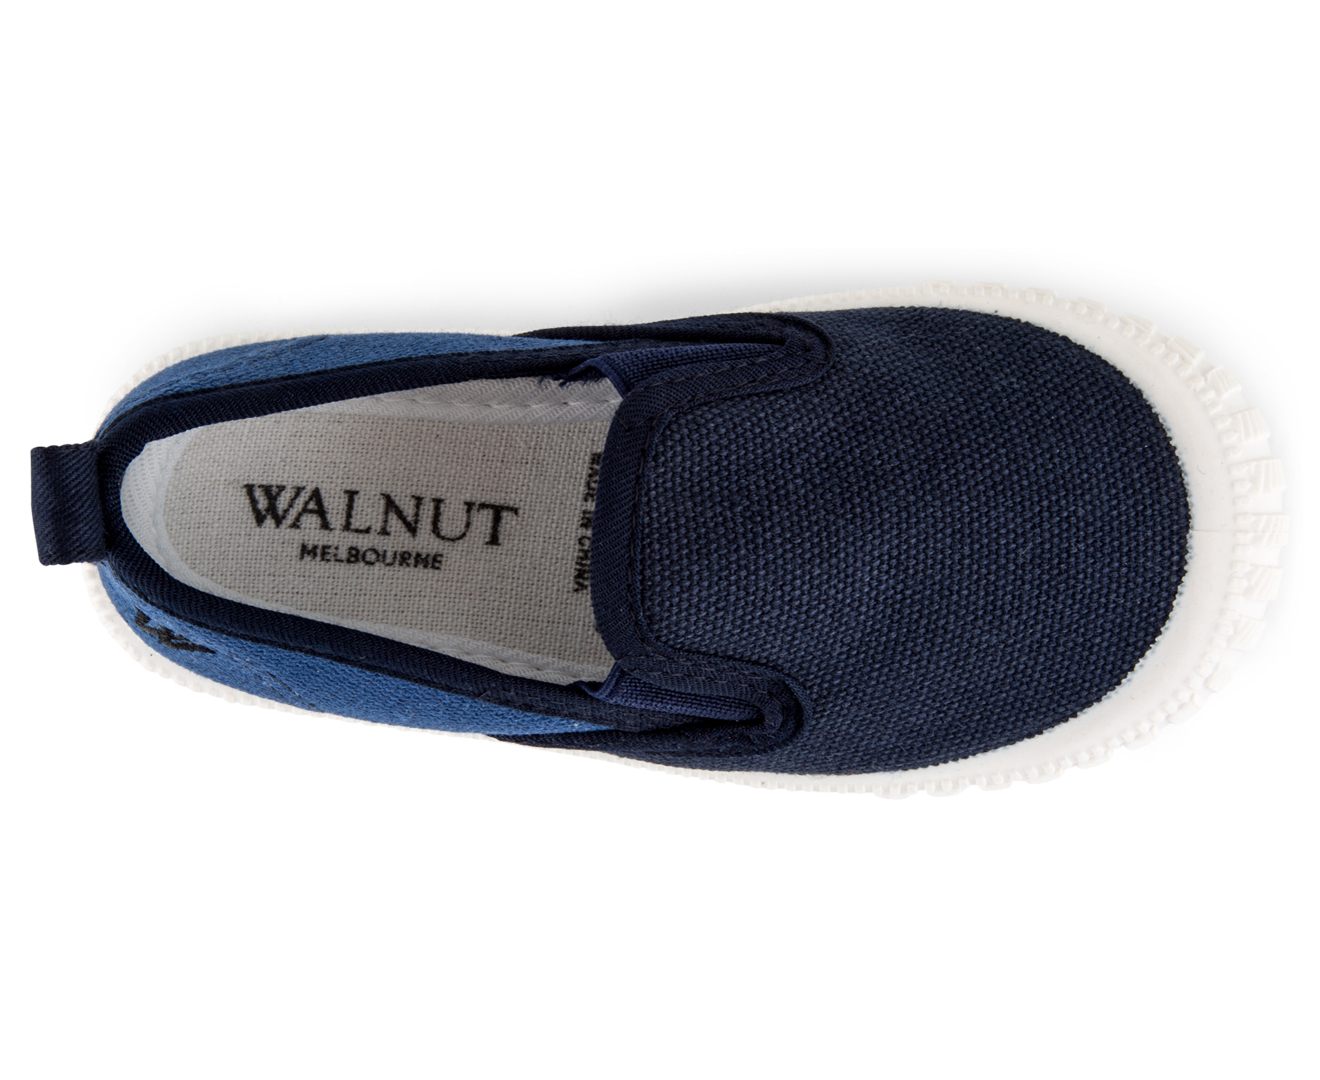 Walnut Taupe/Navy Charlie Cruise Shoe